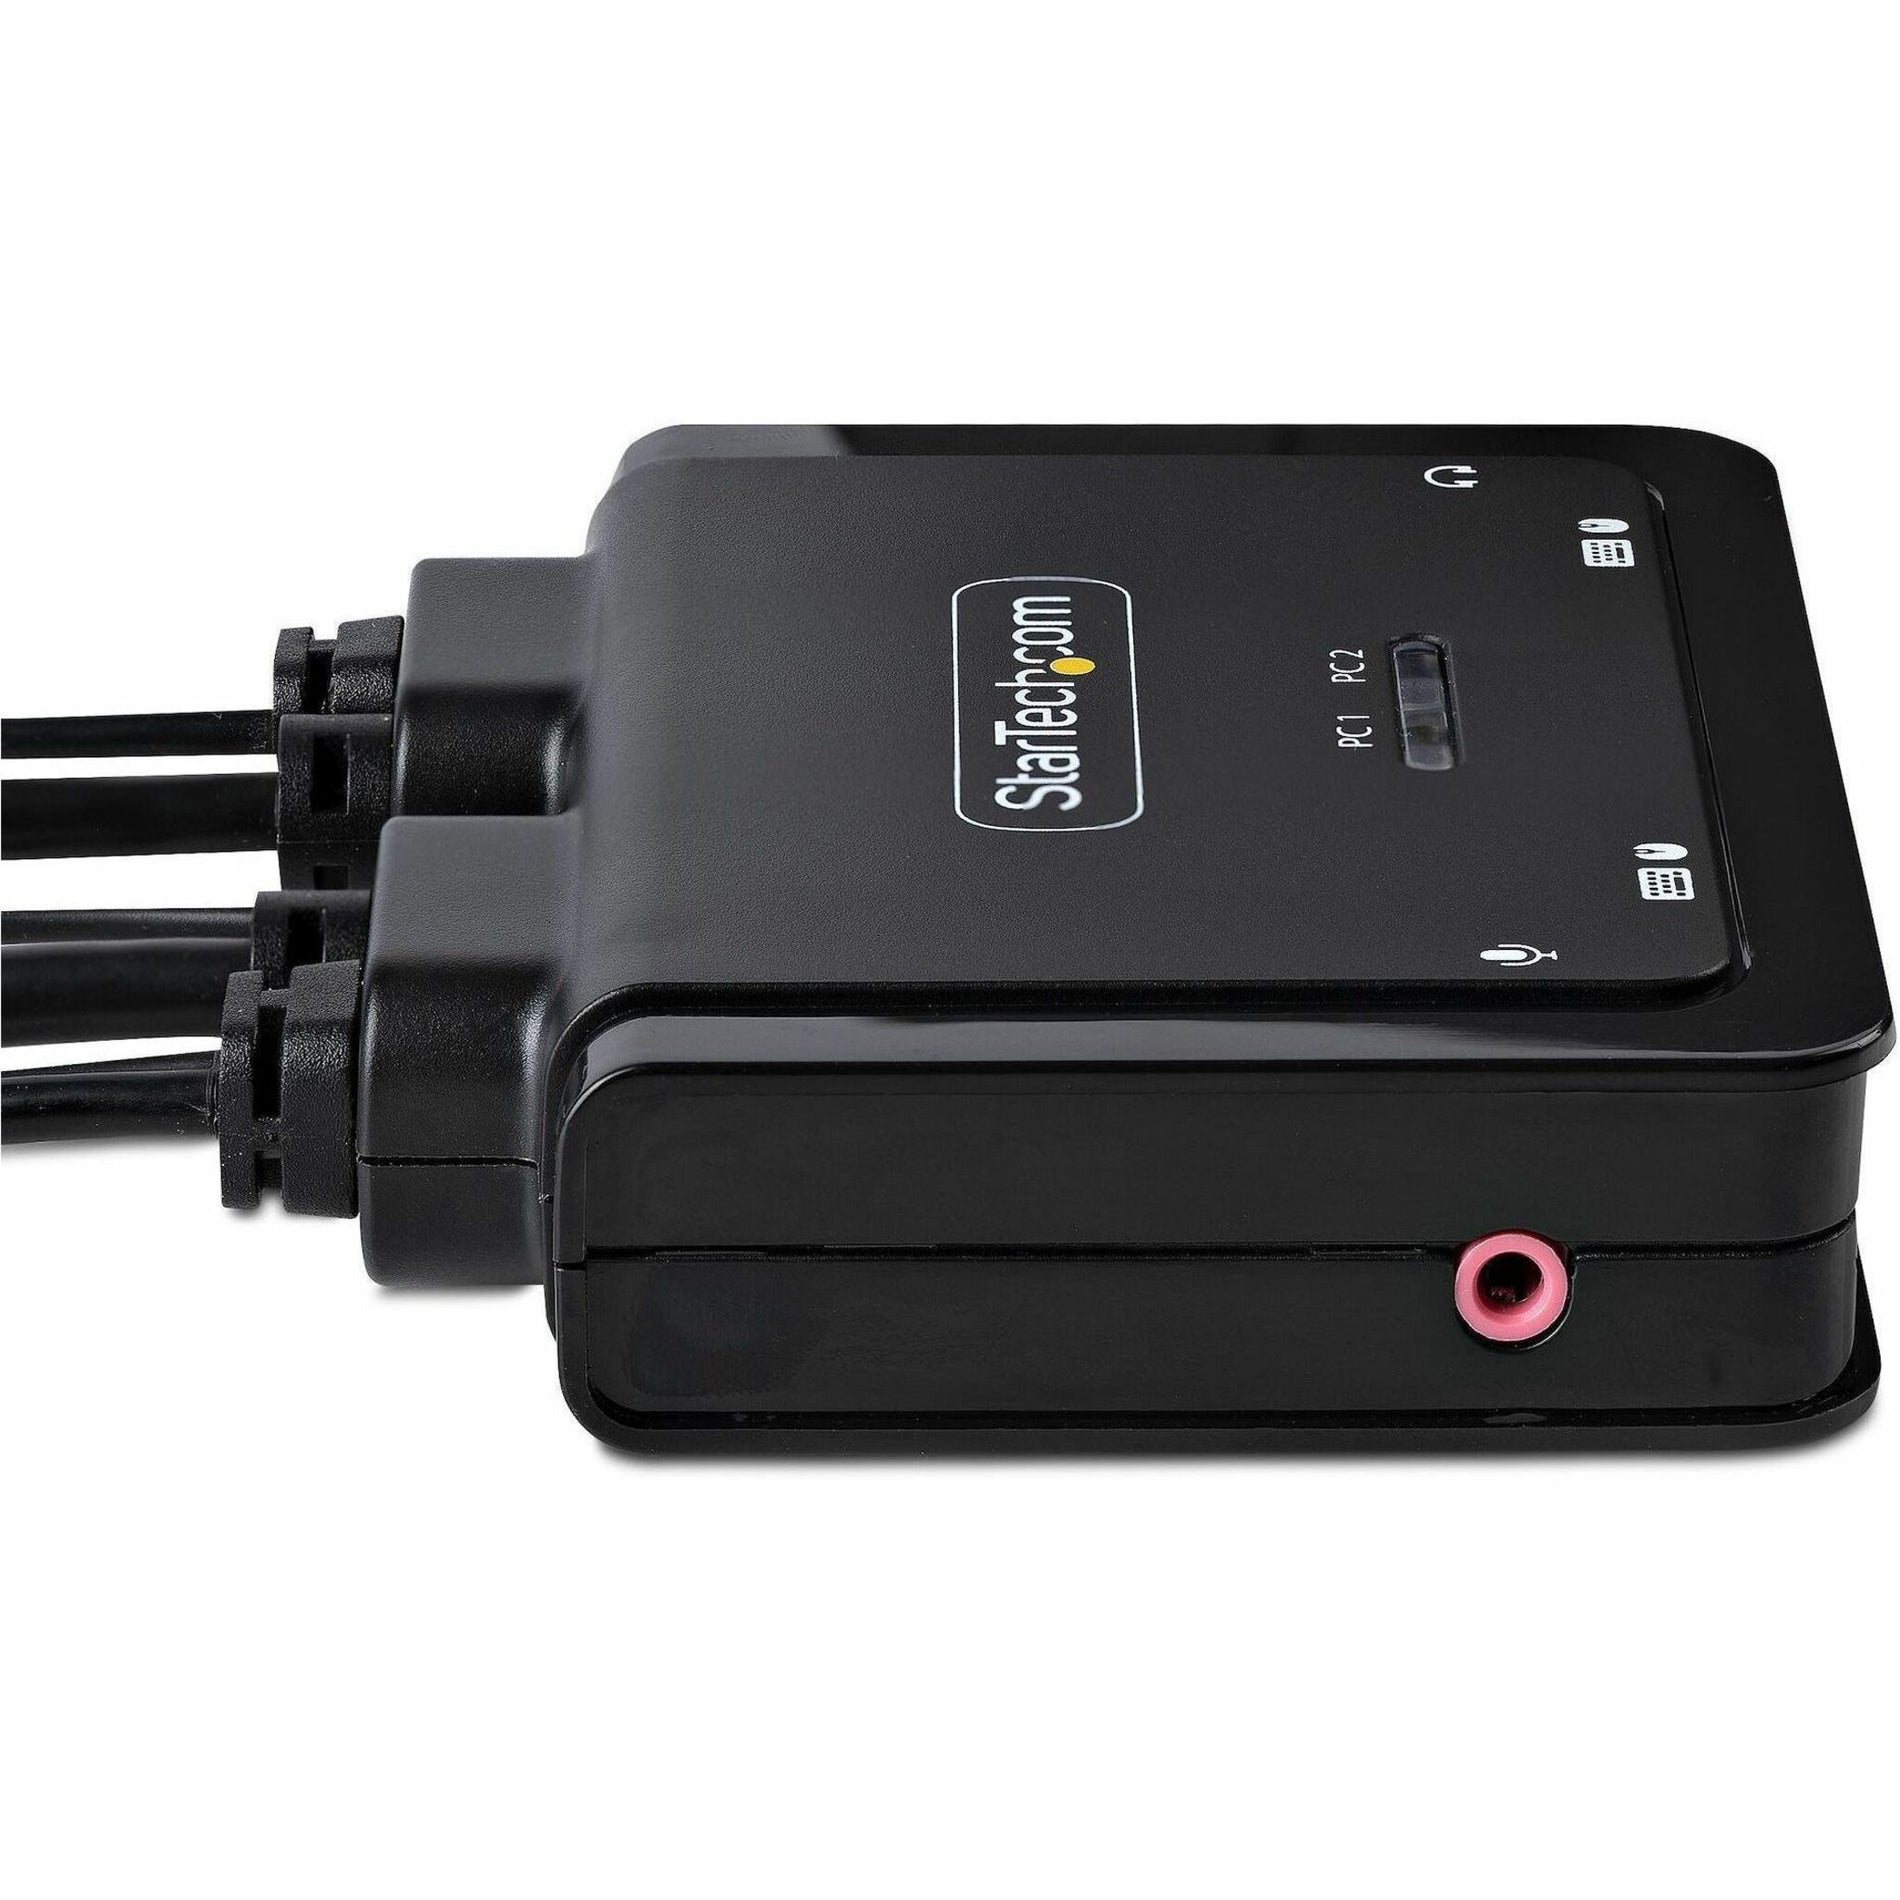 StarTech.com C2-D46-UC2-CBL-KVM KVM Switchbox, 4K, 2-Year Warranty, USB 2.0, DisplayPort, 4 USB Ports